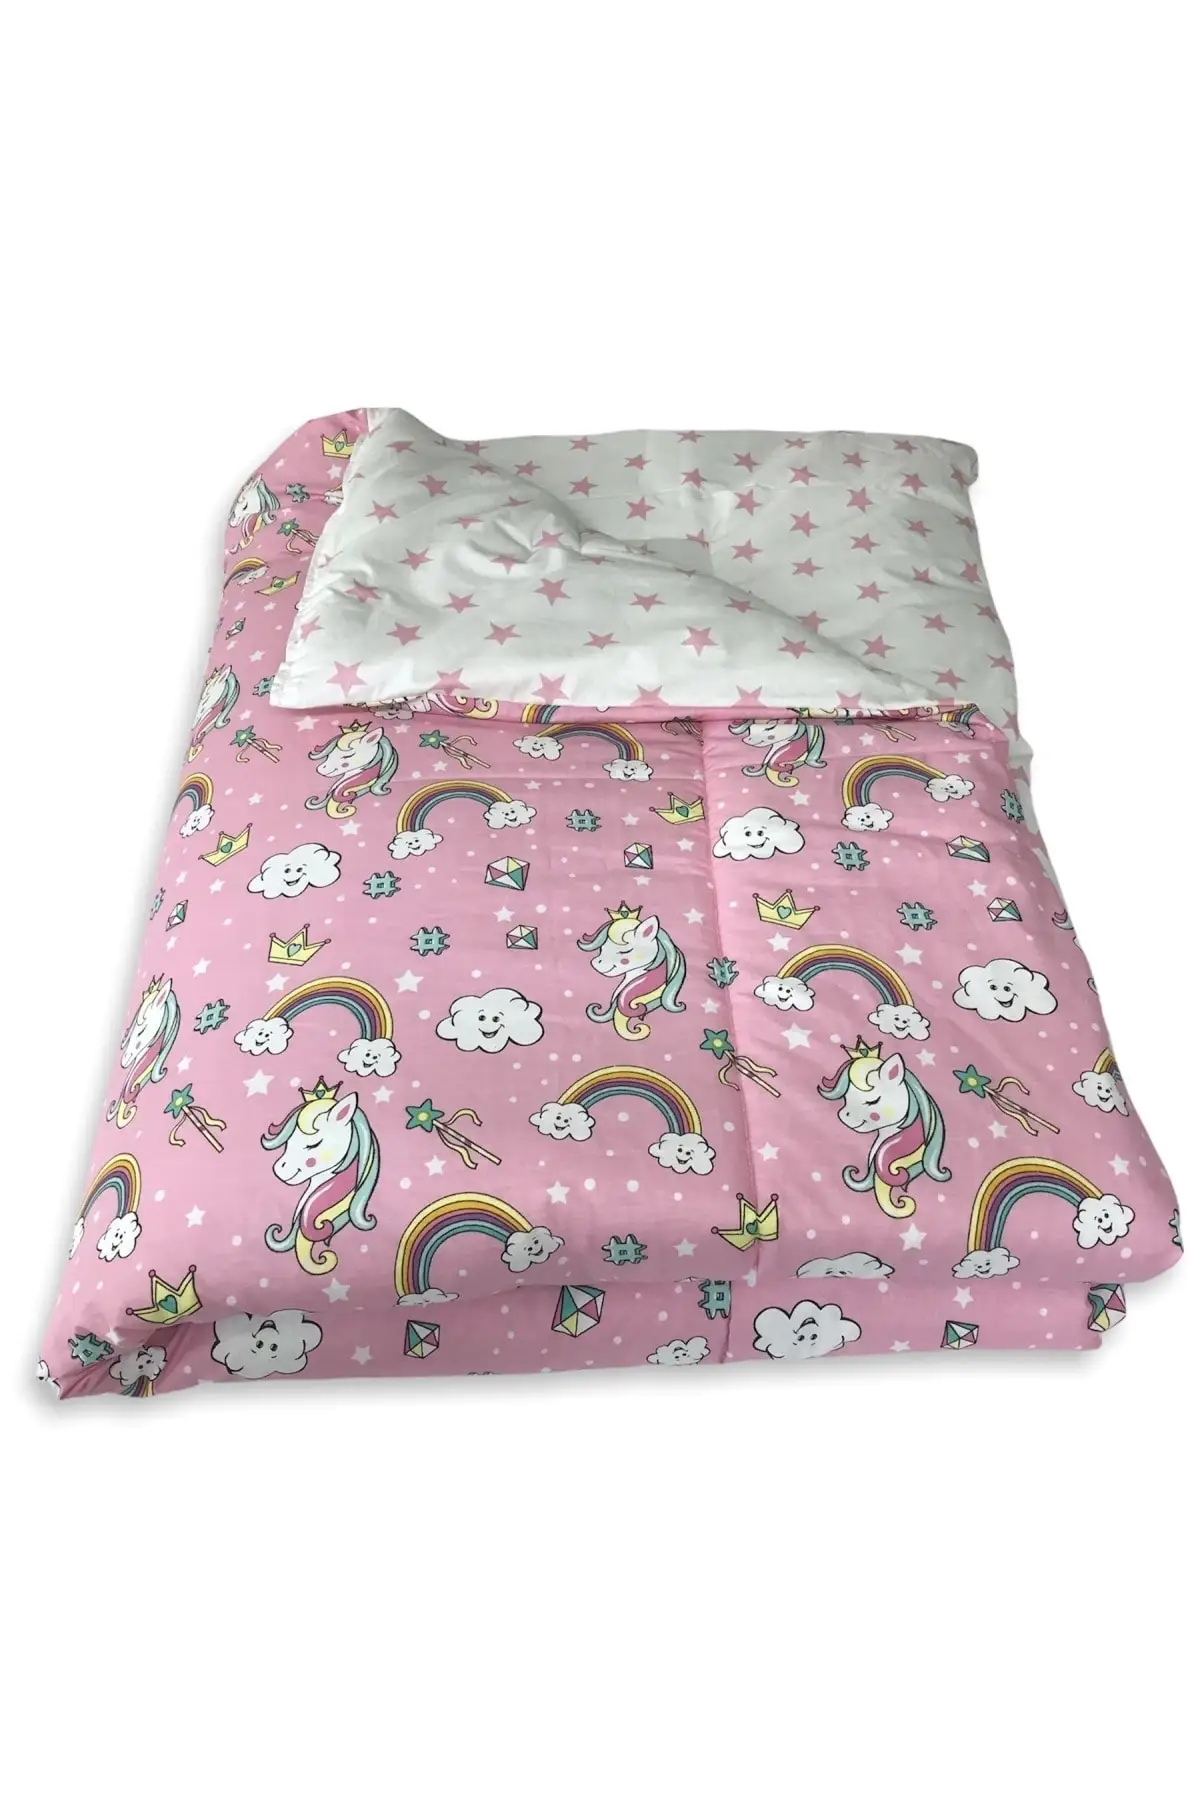 100 cotton Baby Child Quilt 130x200 Cm Dimensions (pink Unicorn Star) fiber Cotton Baby & Kids Quilt Home